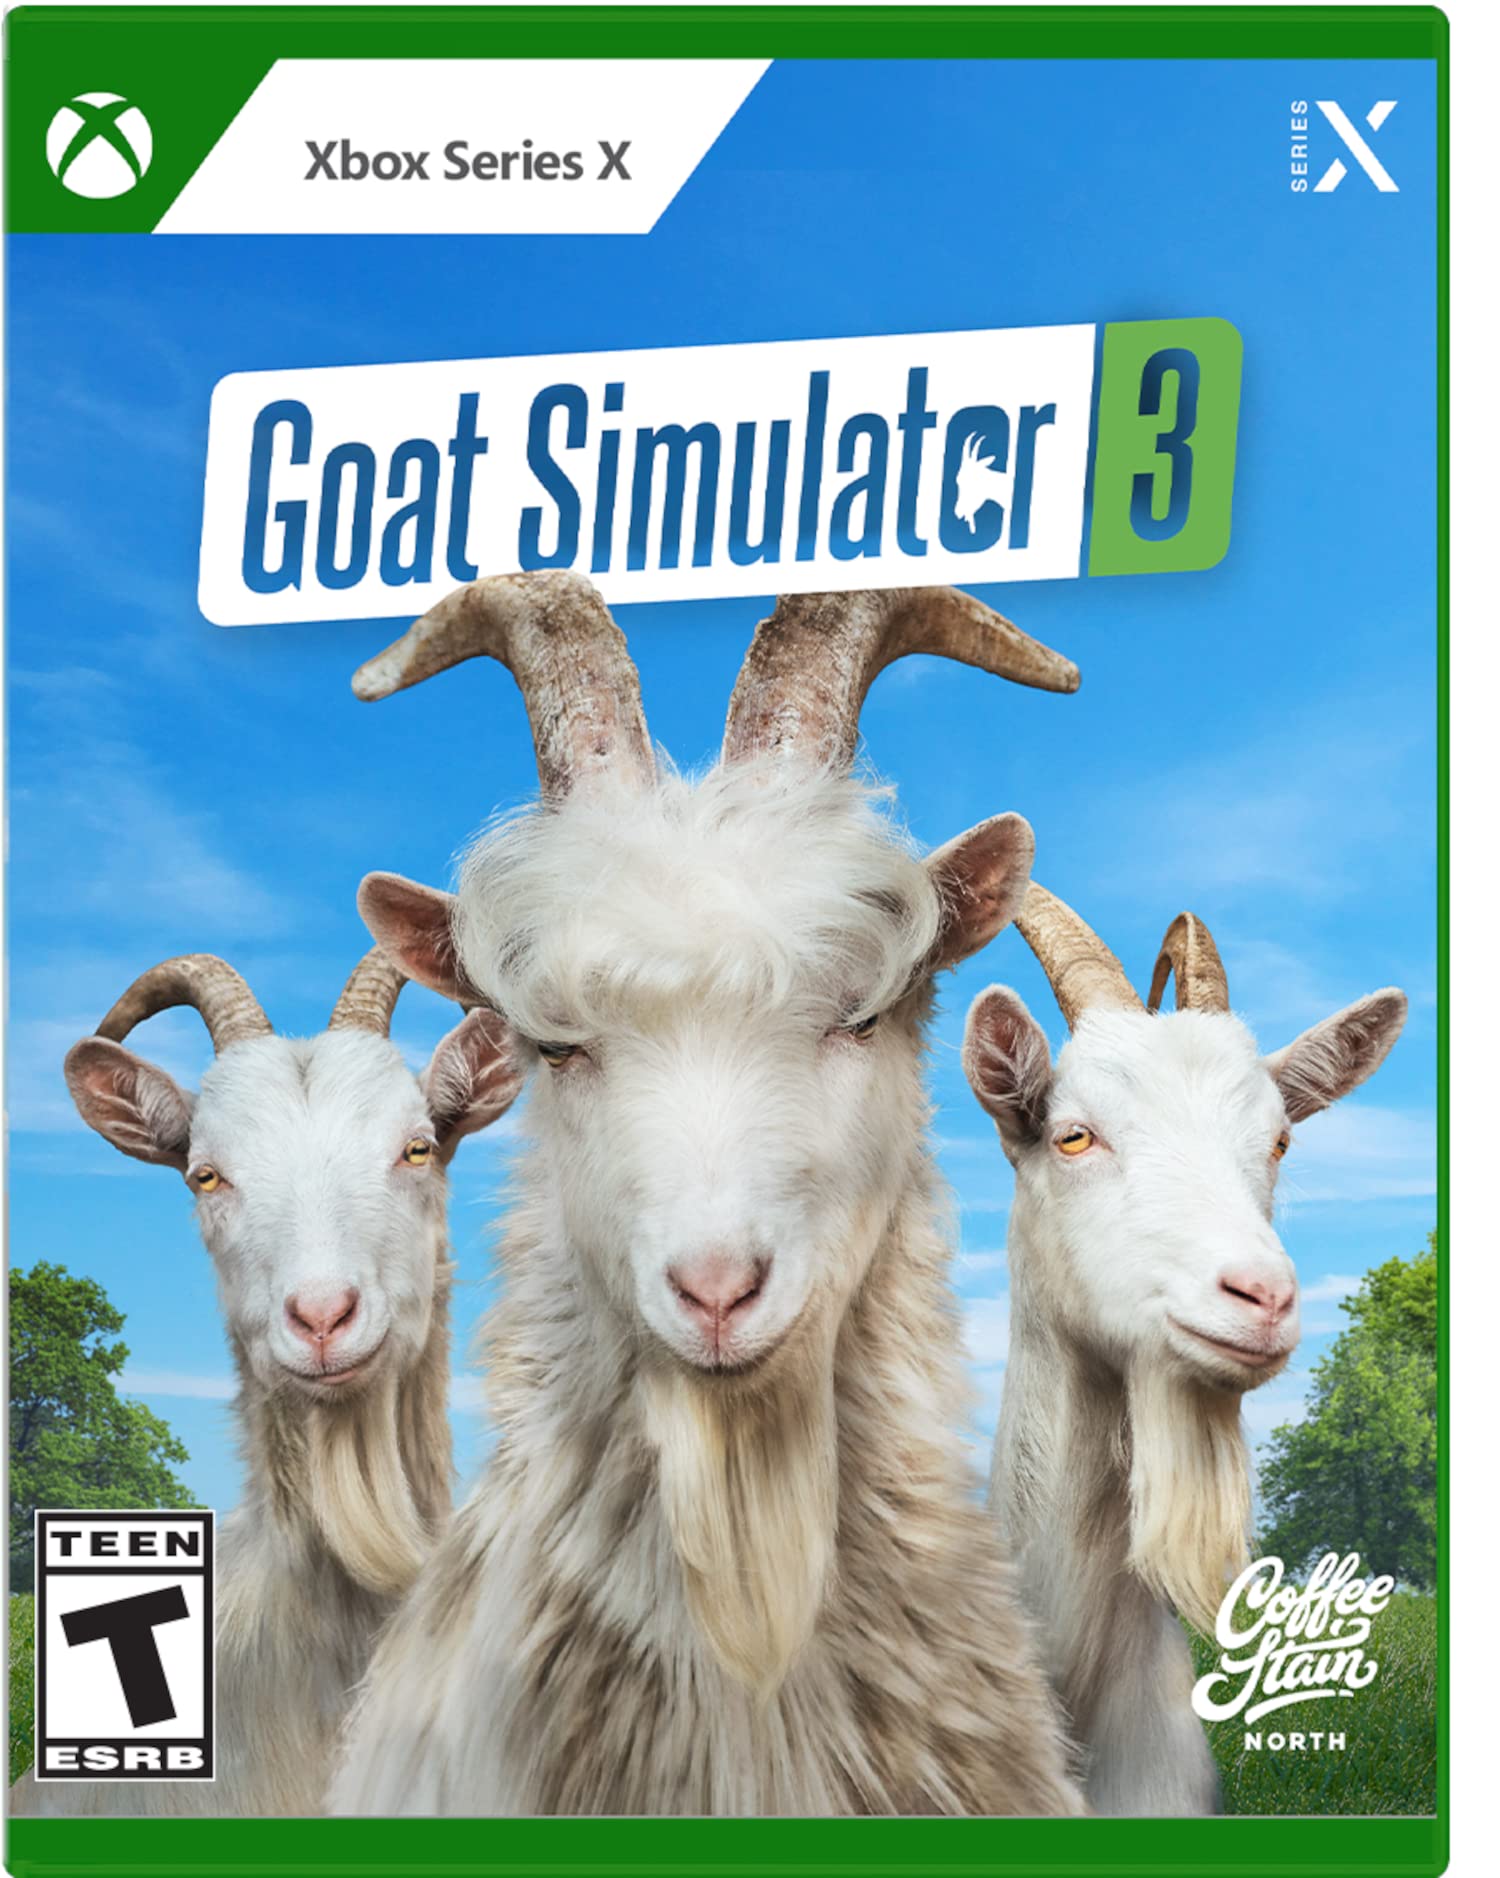 $9.99: Goat Simulator 3 - Xbox Series X